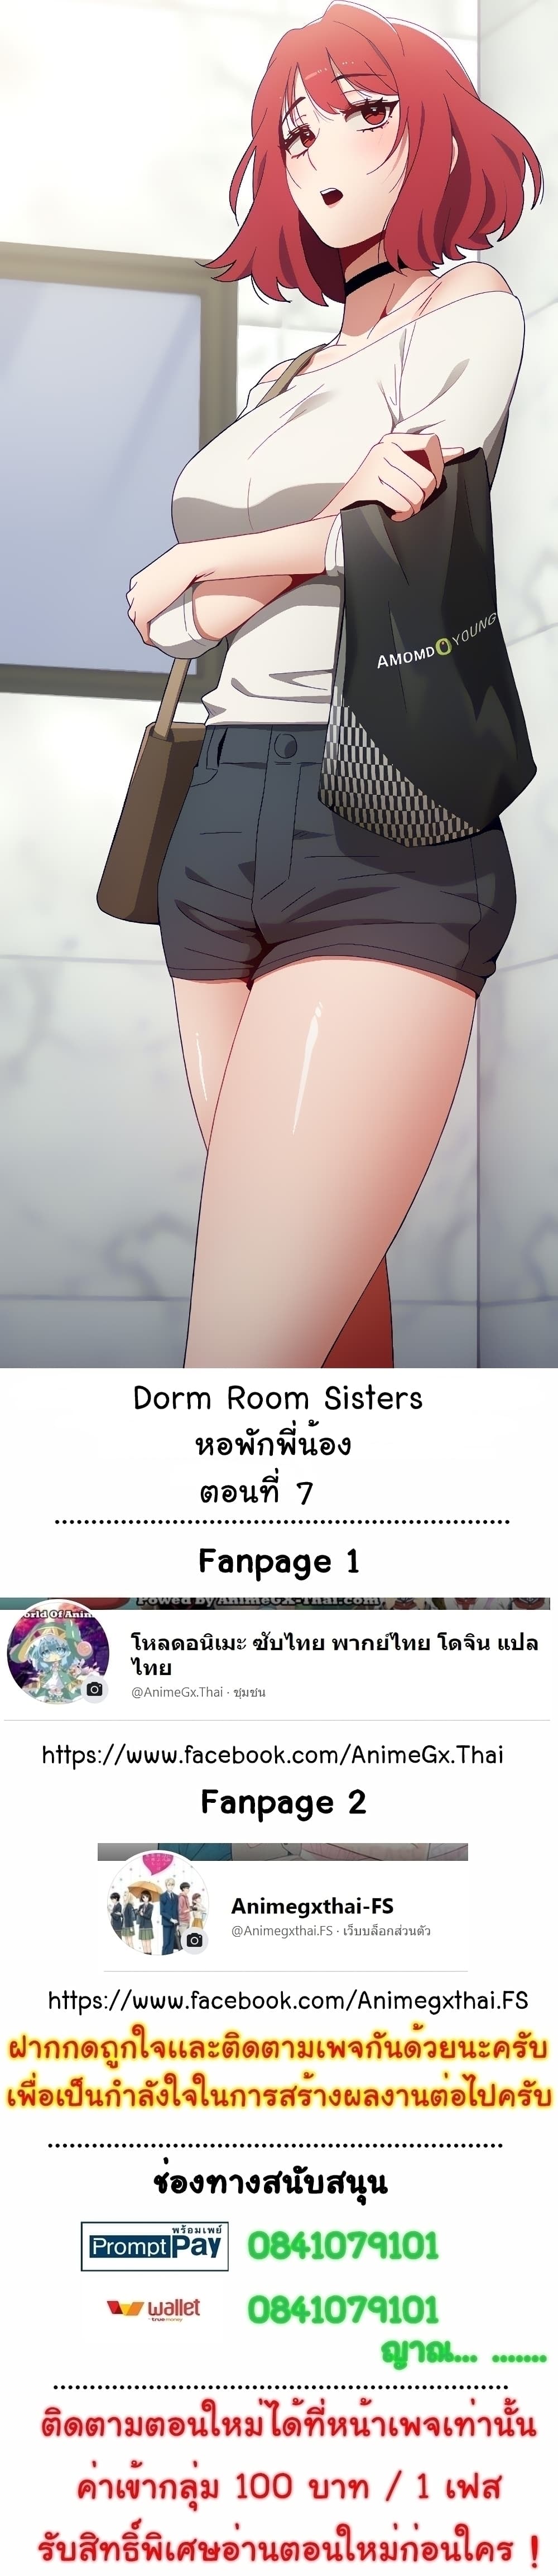 Dorm Room Sisters 7-7